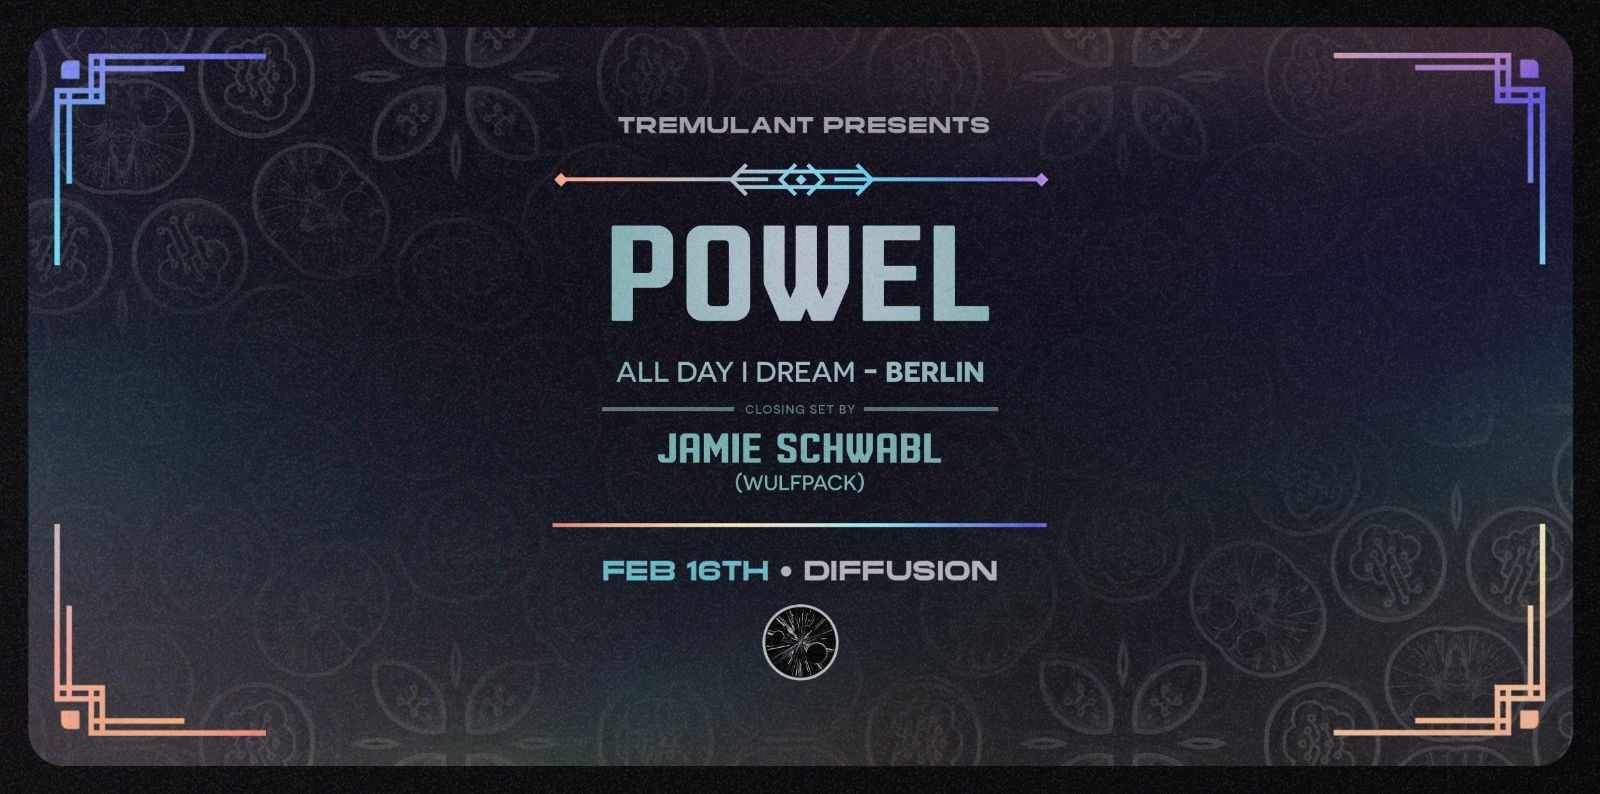 Tremulant presents - Powel (All Day I Dream - Berlin) - フライヤー表